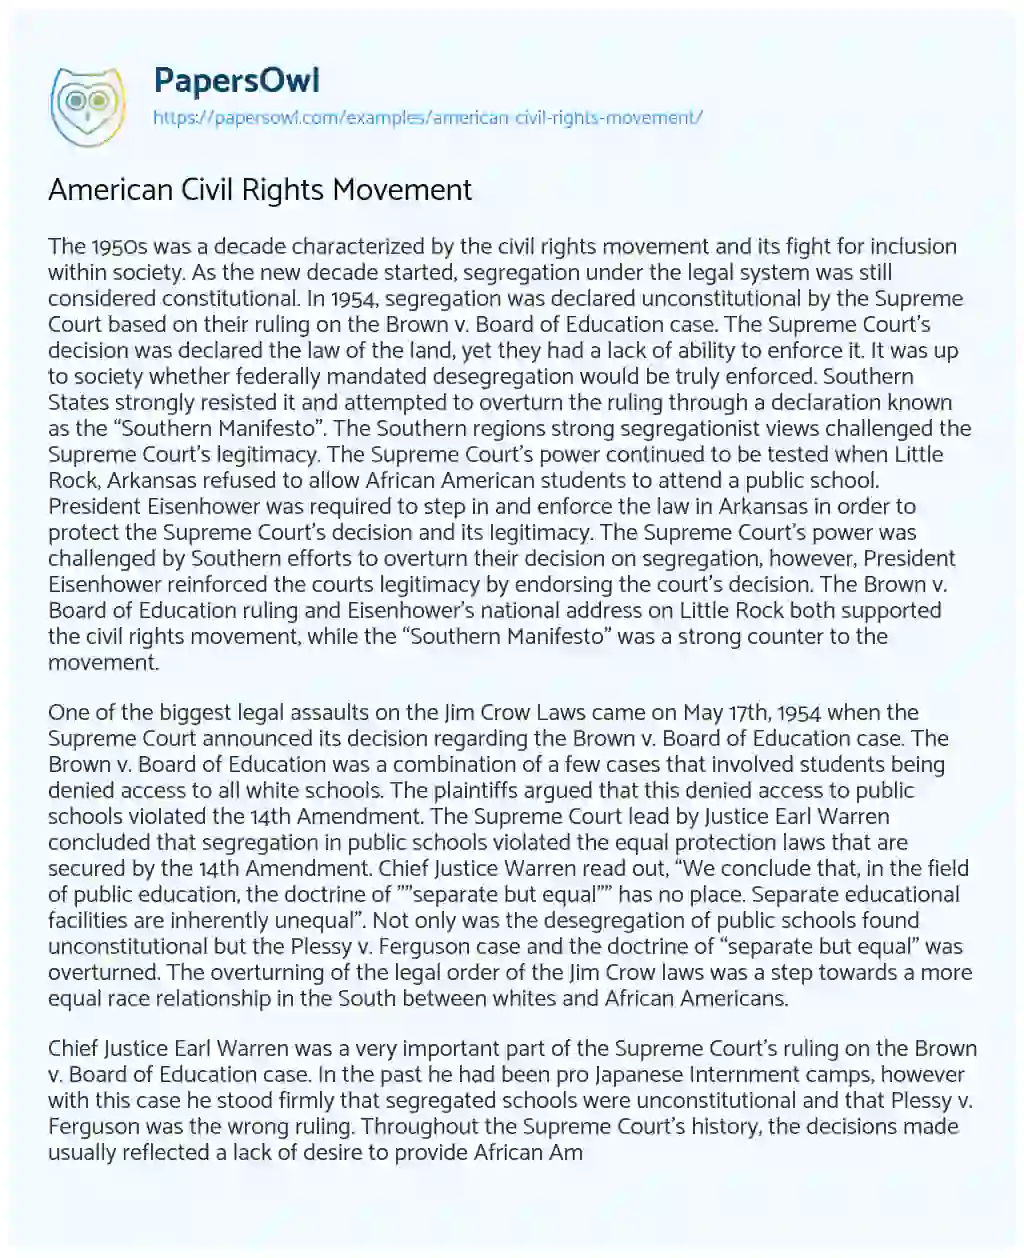 Essay on American Civil Rights Movement